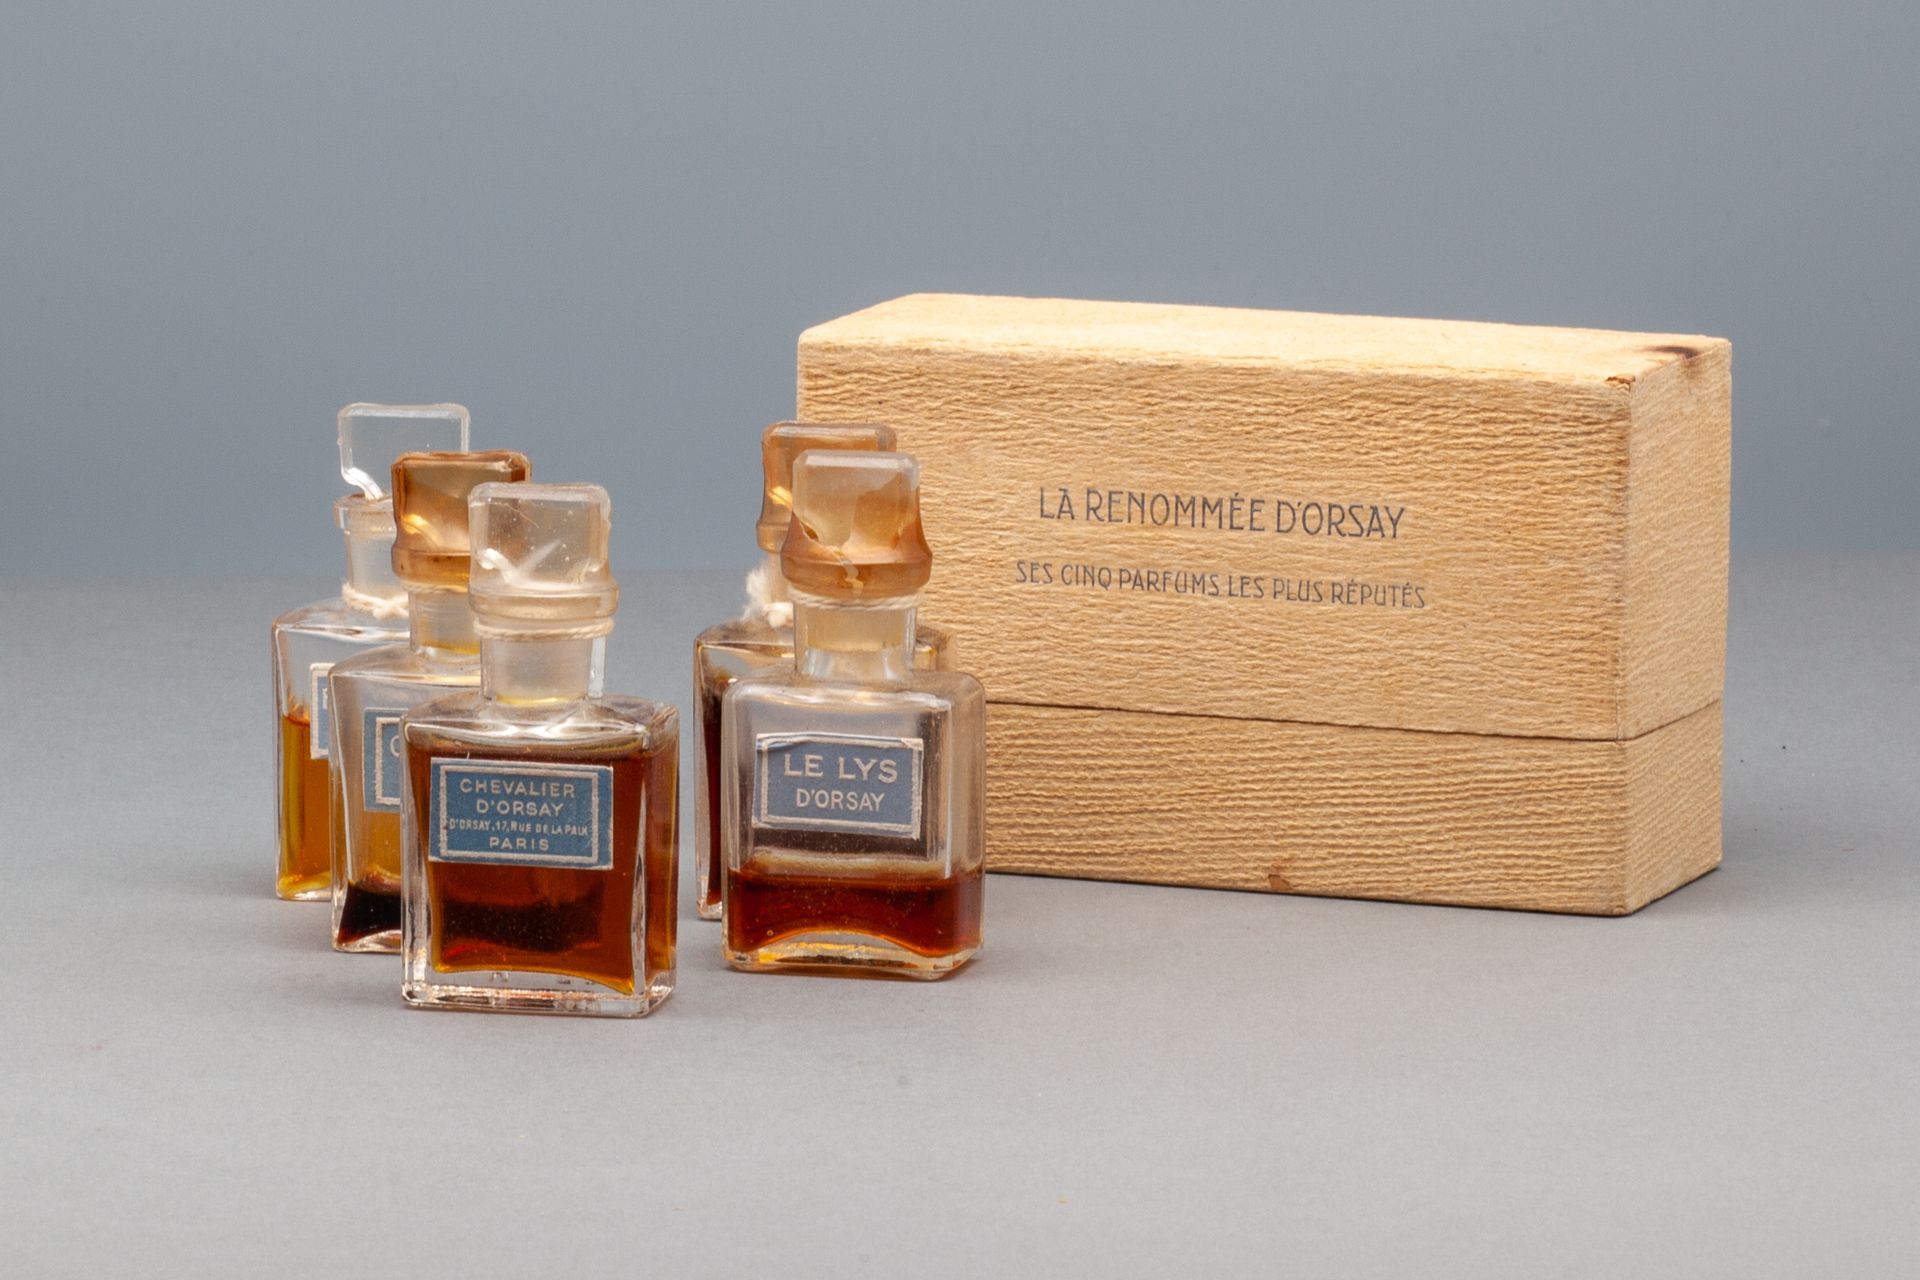 D'ORSAY "LA RENOMMEE" 盒子里有五个补给瓶，包括 "Fleurs de France", "Les Fleurs d'Orsay", "Ch&hellip;